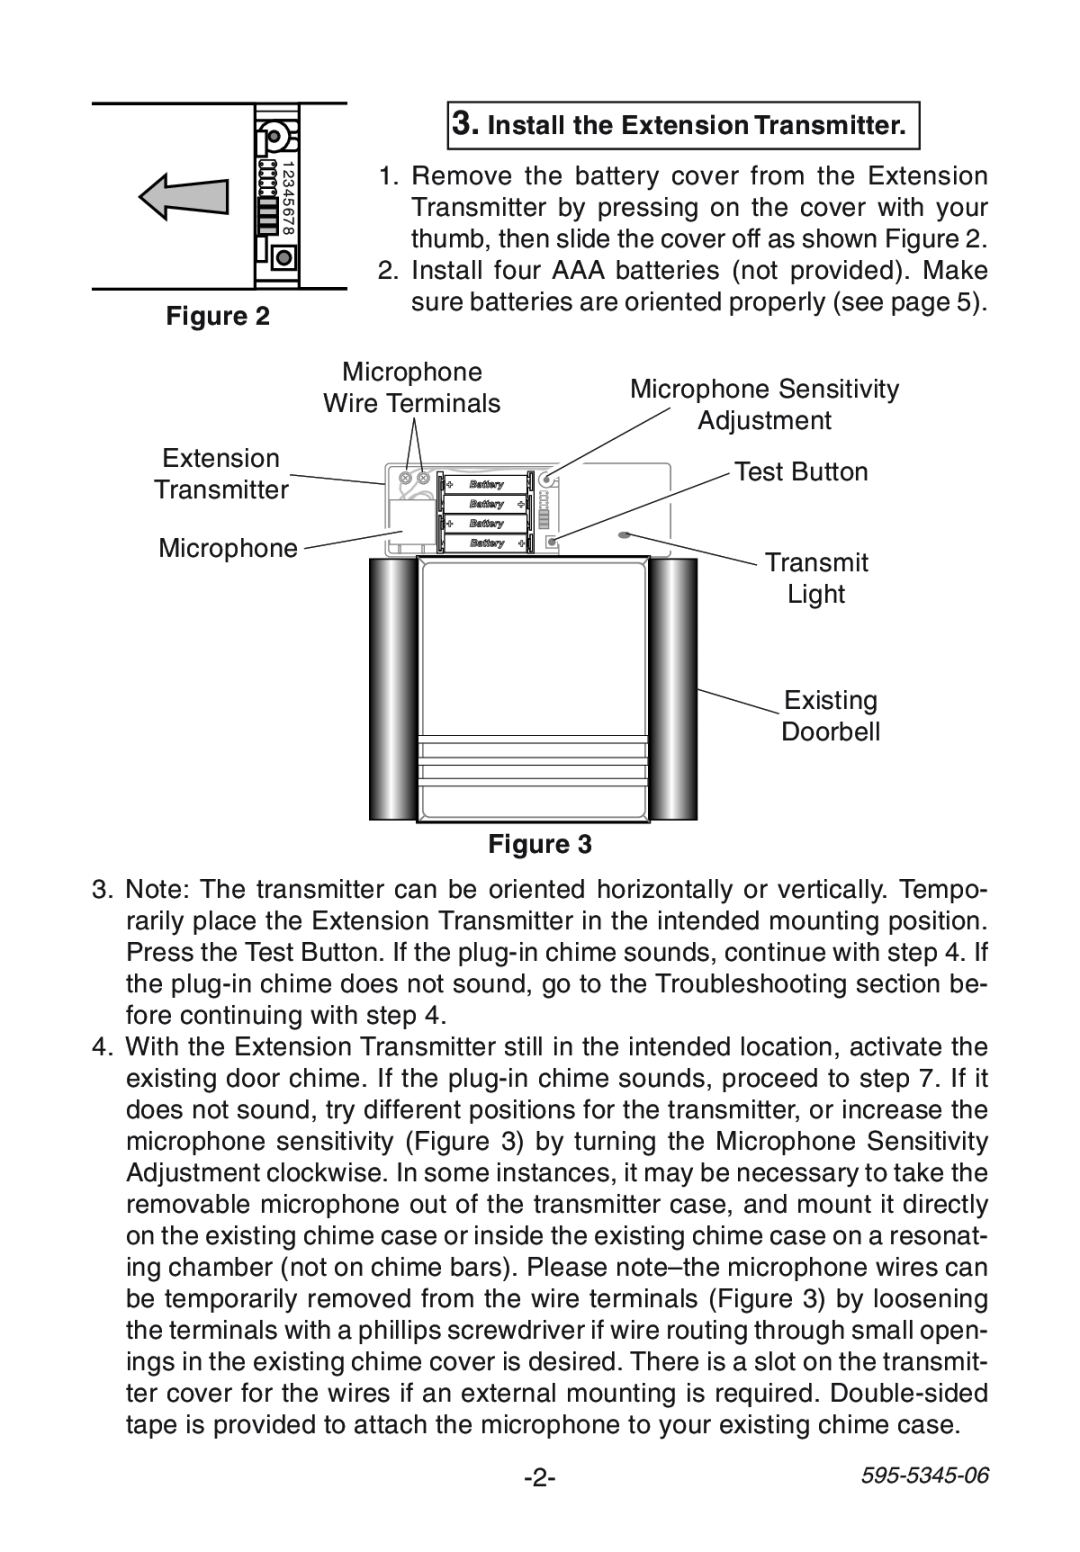 Heath Zenith SL-6157 manual Install the Extension Transmitter 